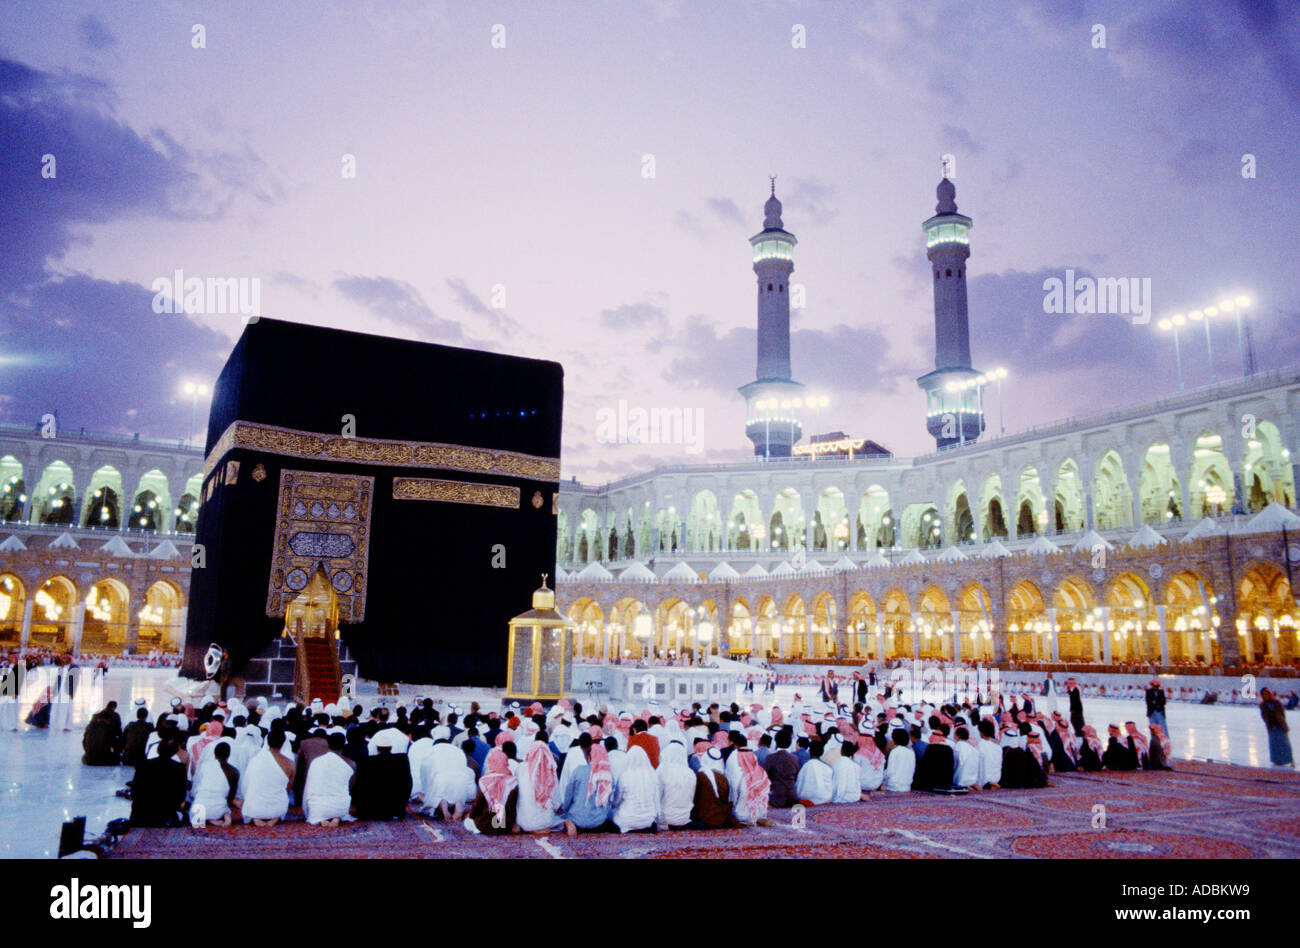 Makkah Saudi Arabia Hajj Pilgrims Kneeling by the Kaaba in Masjid al-Haram Stock Photo